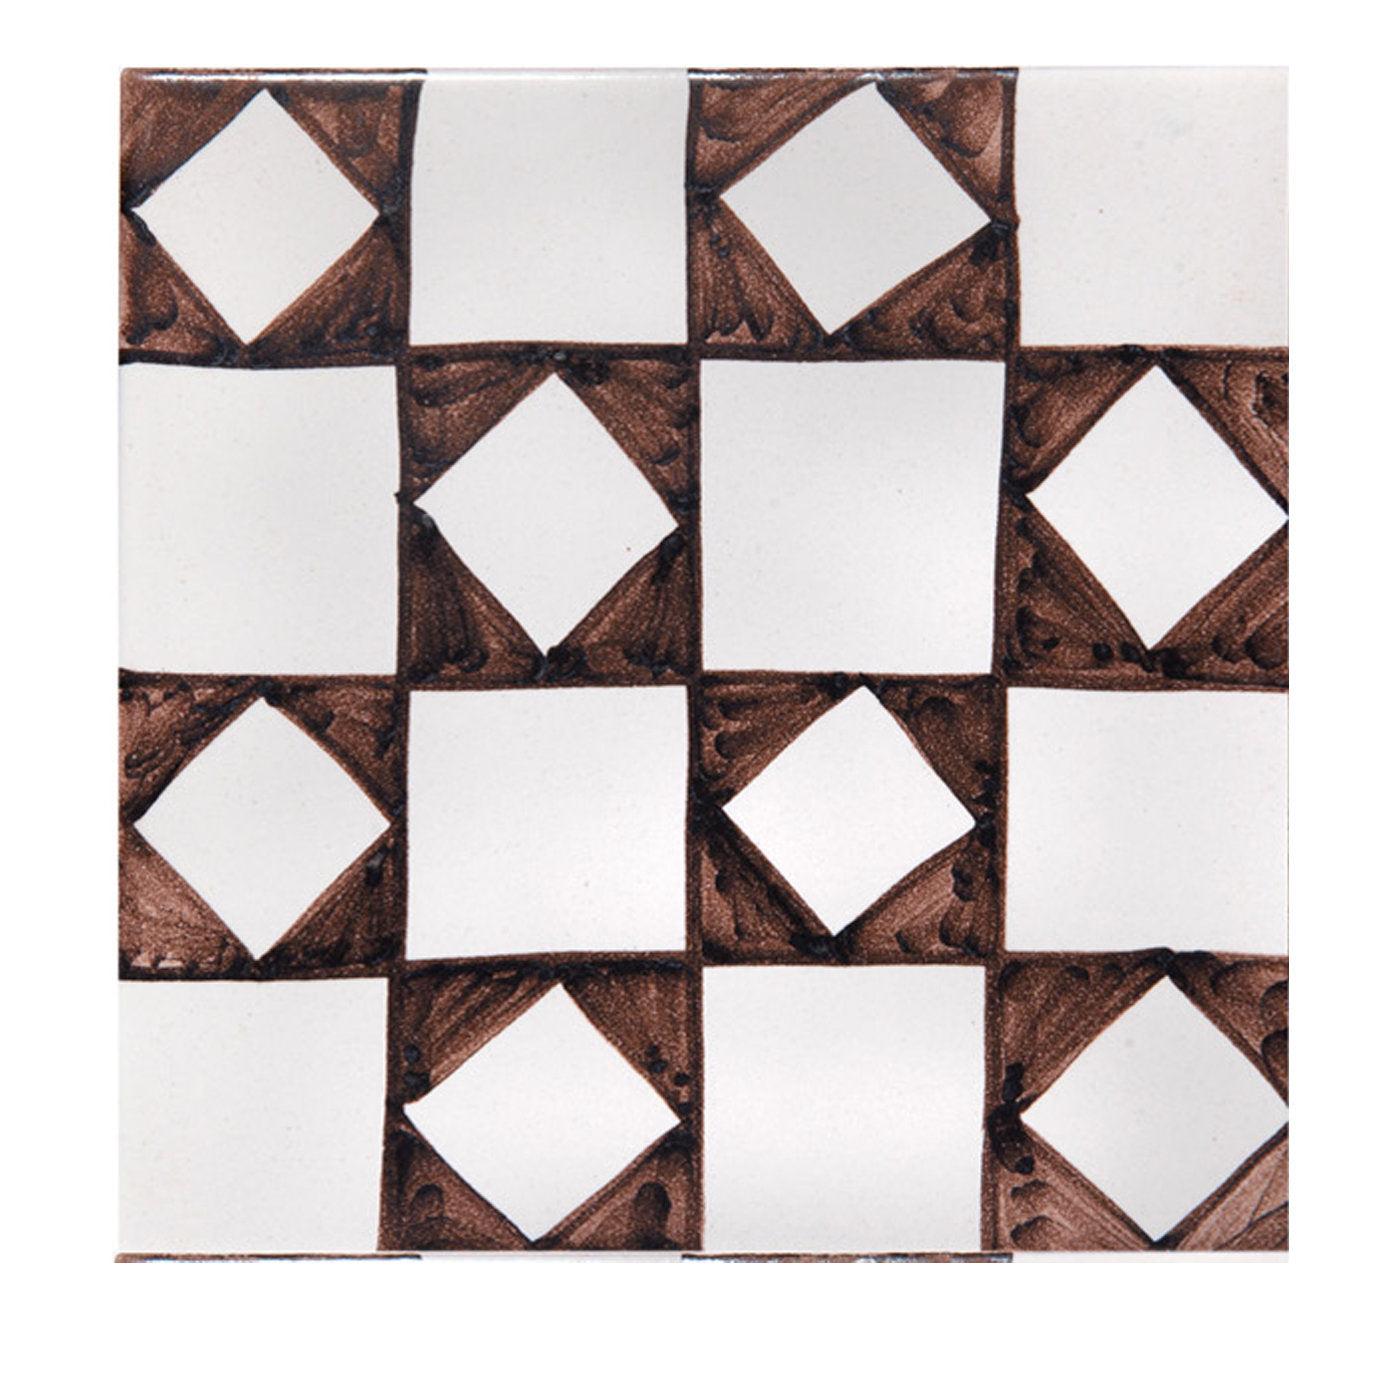 Set of 4 Scacco Tiles - Alternative view 1